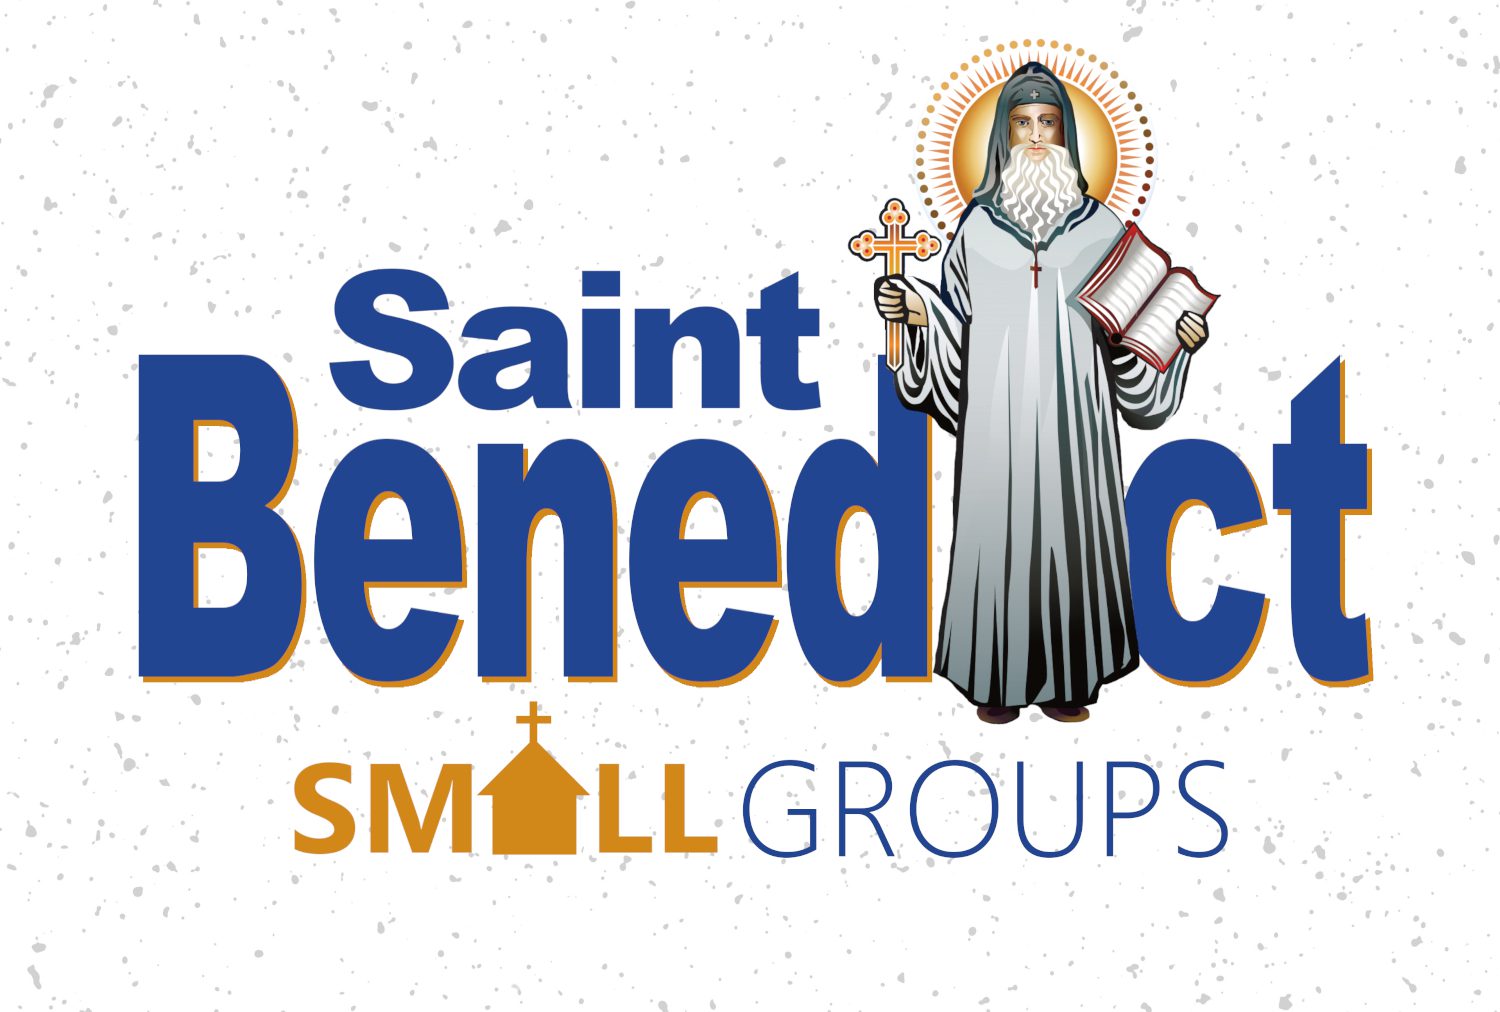 Saint Benedict Small Groups